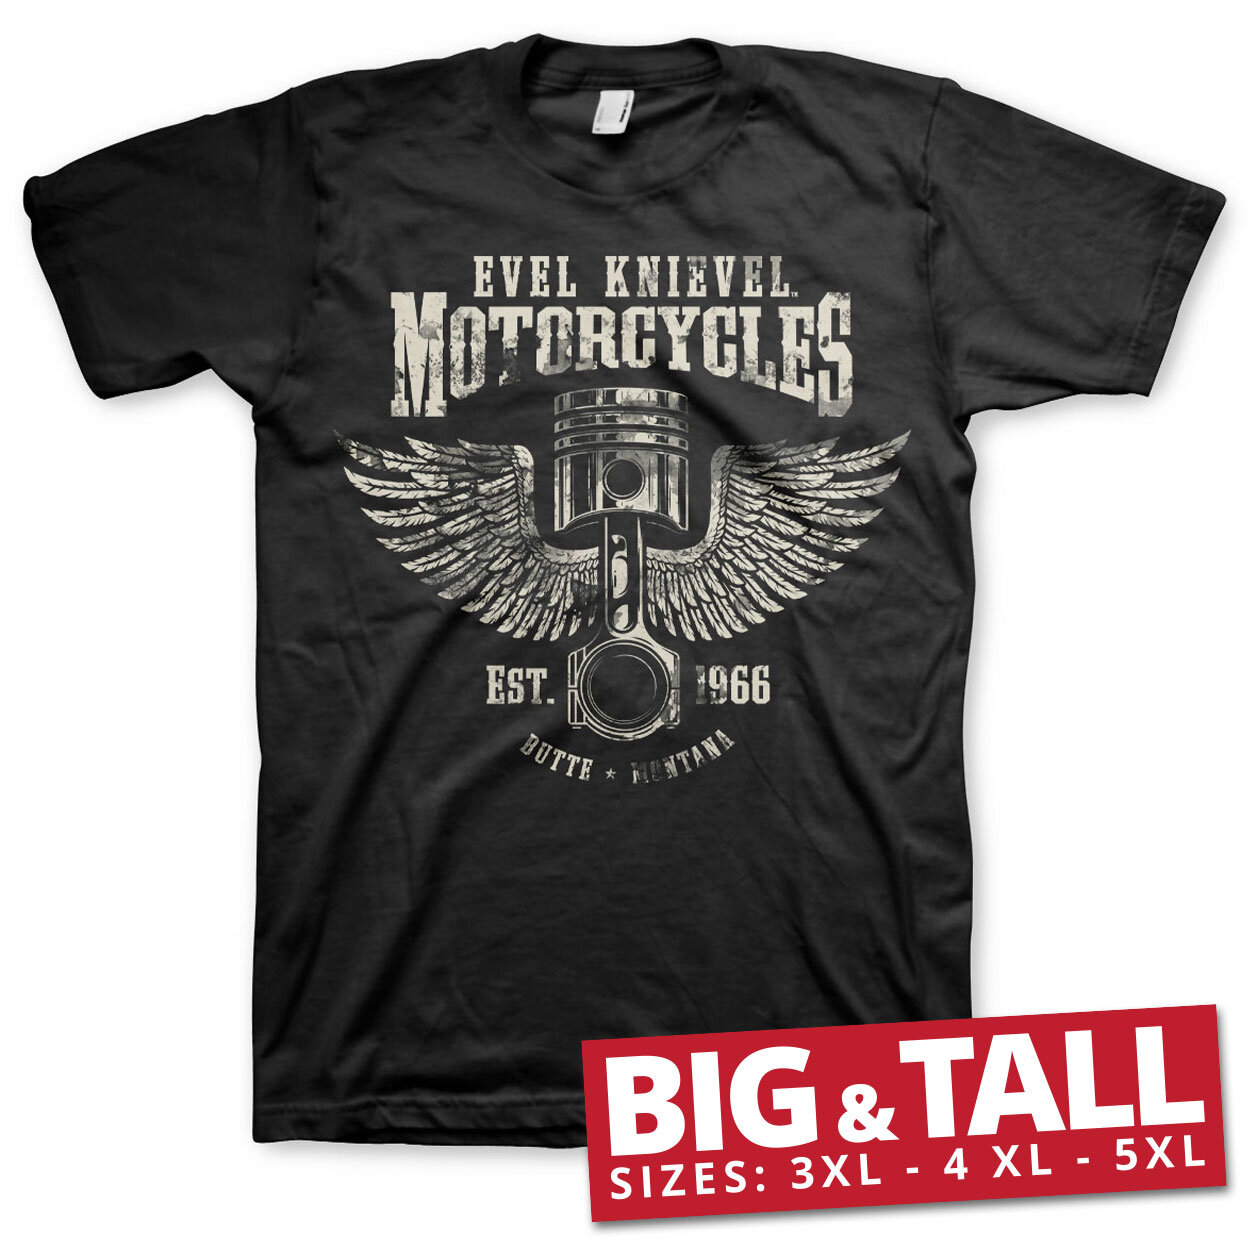 Evel Knievel Motorcycles Big & Tall T-Shirt